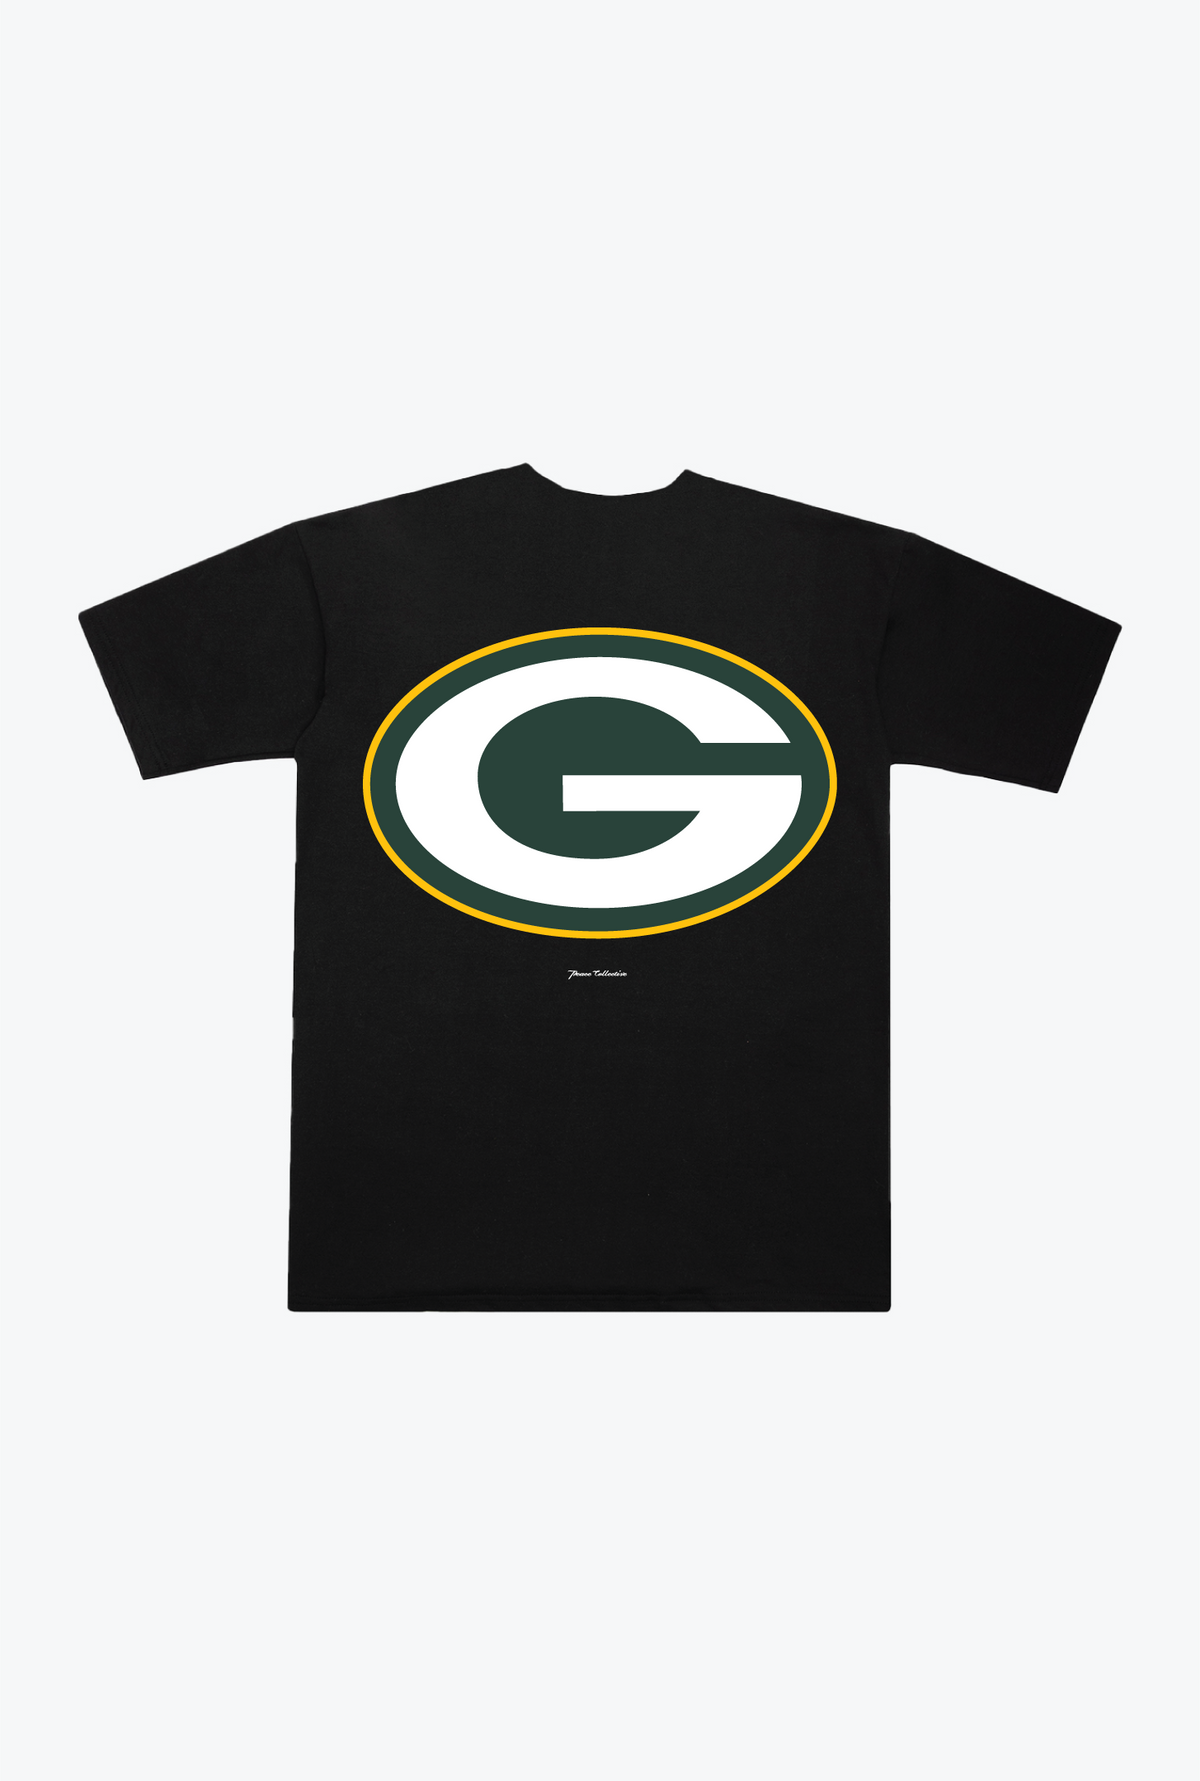 Green Bay Packers Heavyweight T-Shirt - Black